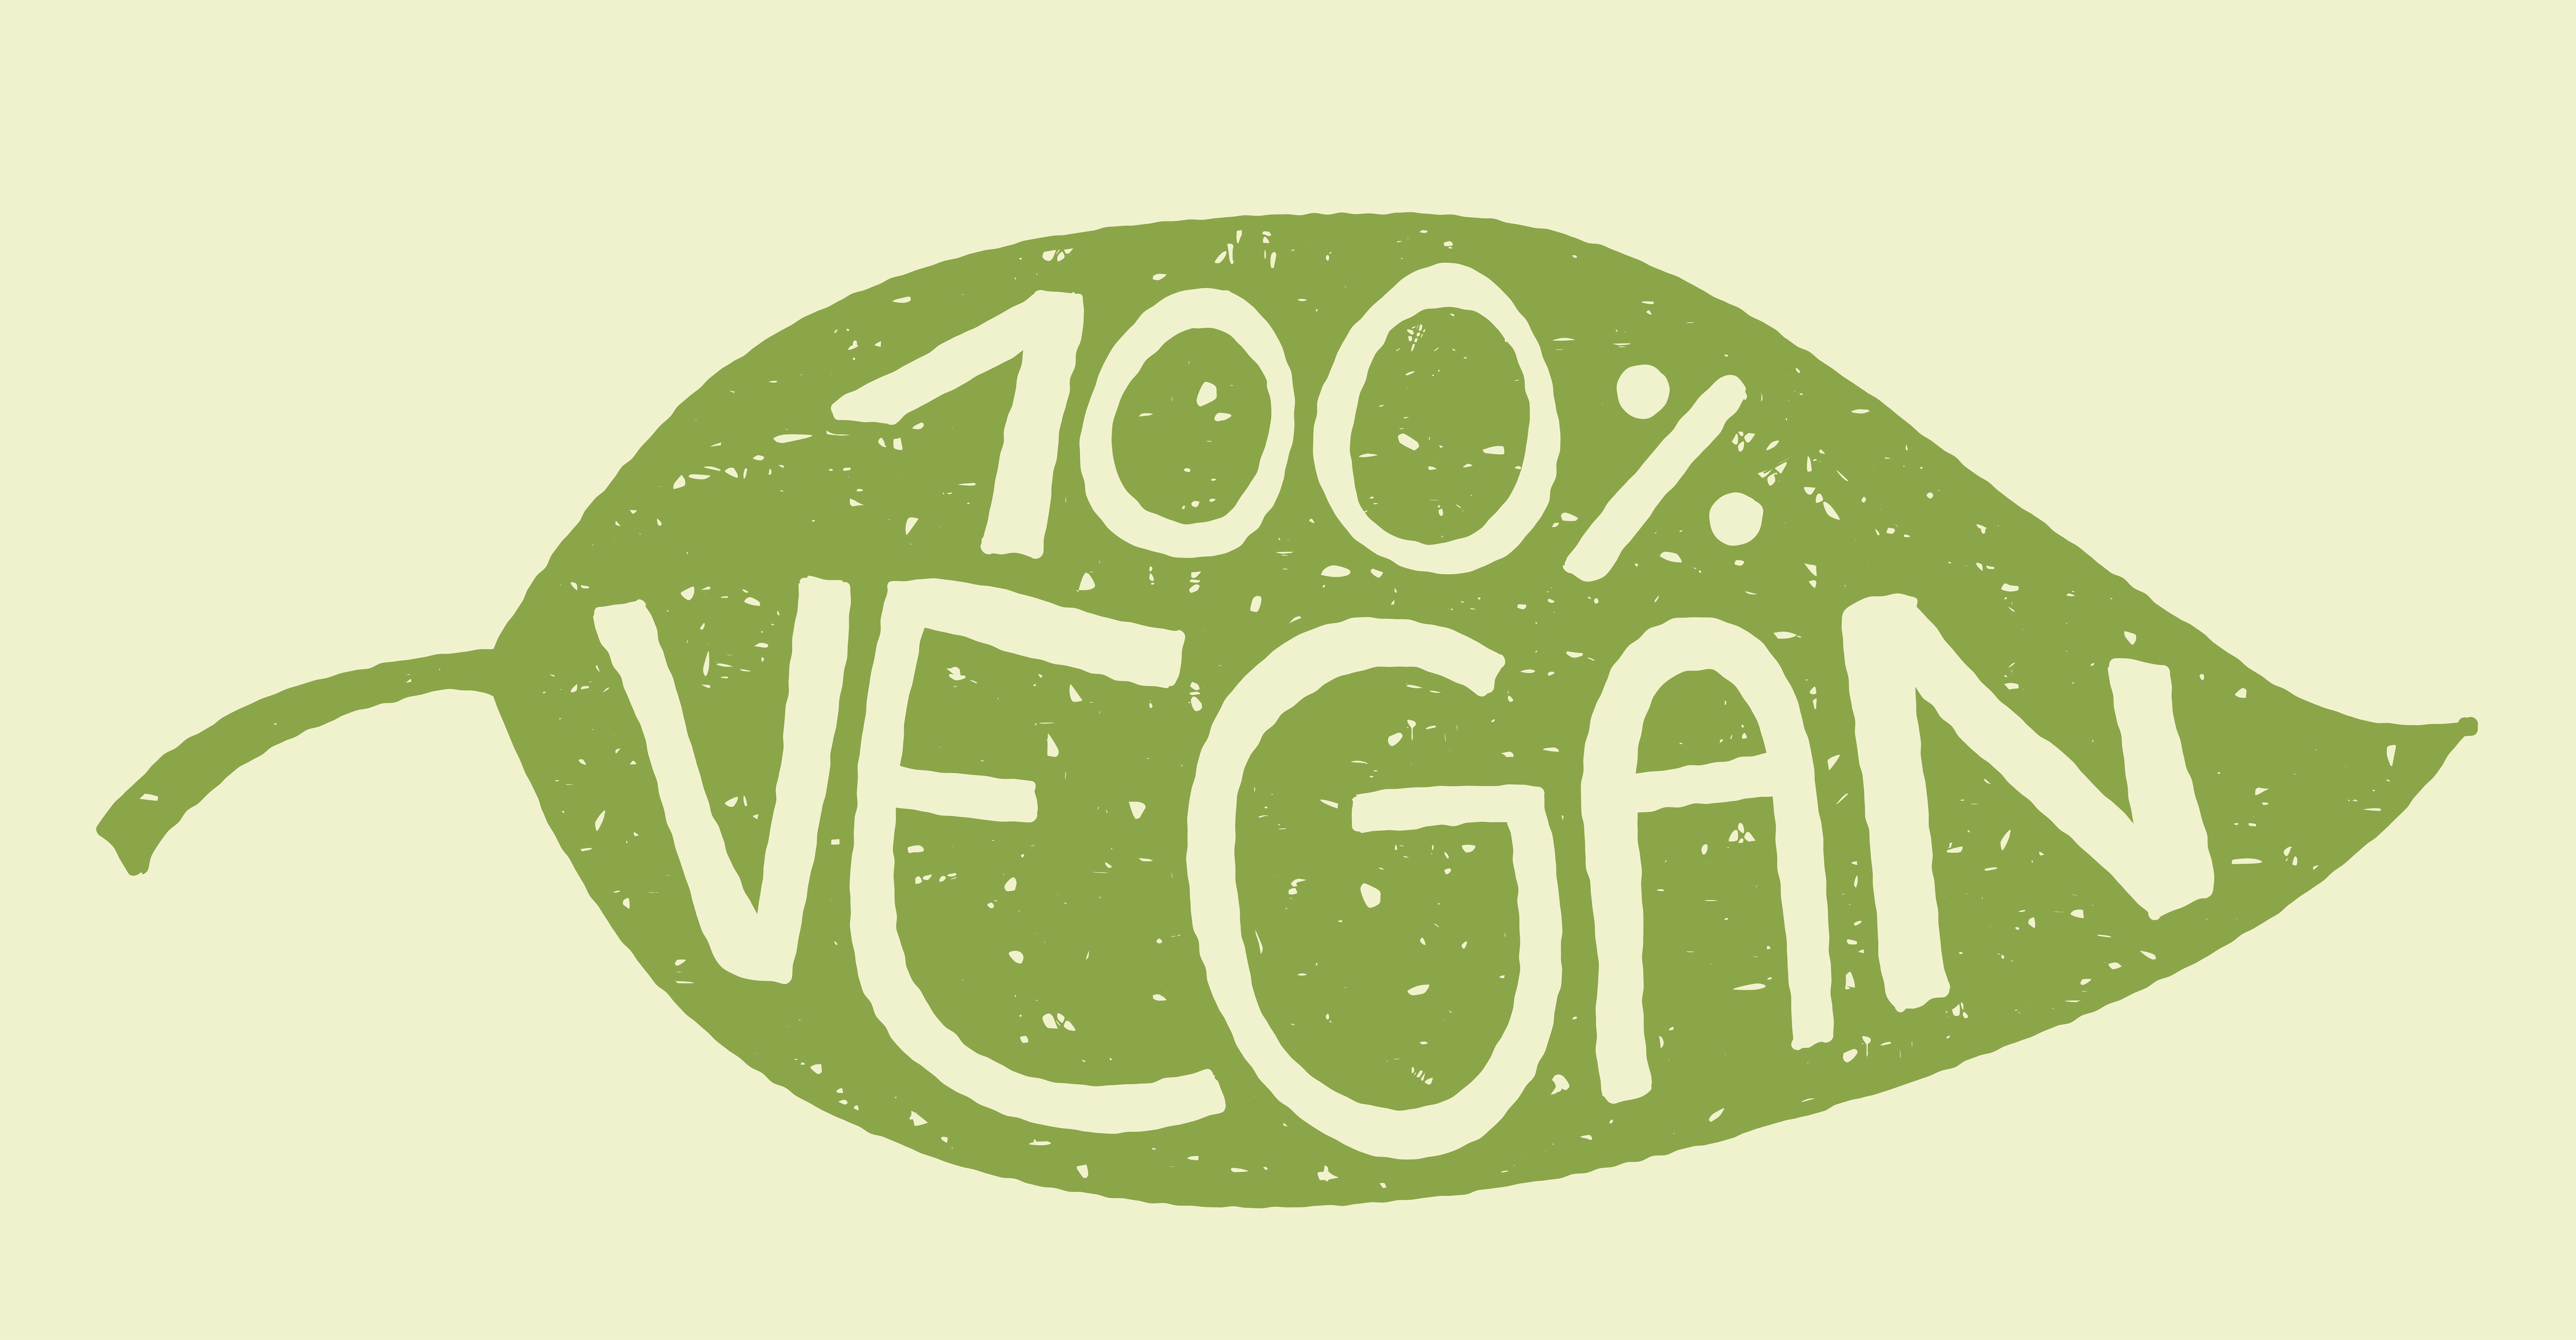 persuasive speech about veganism